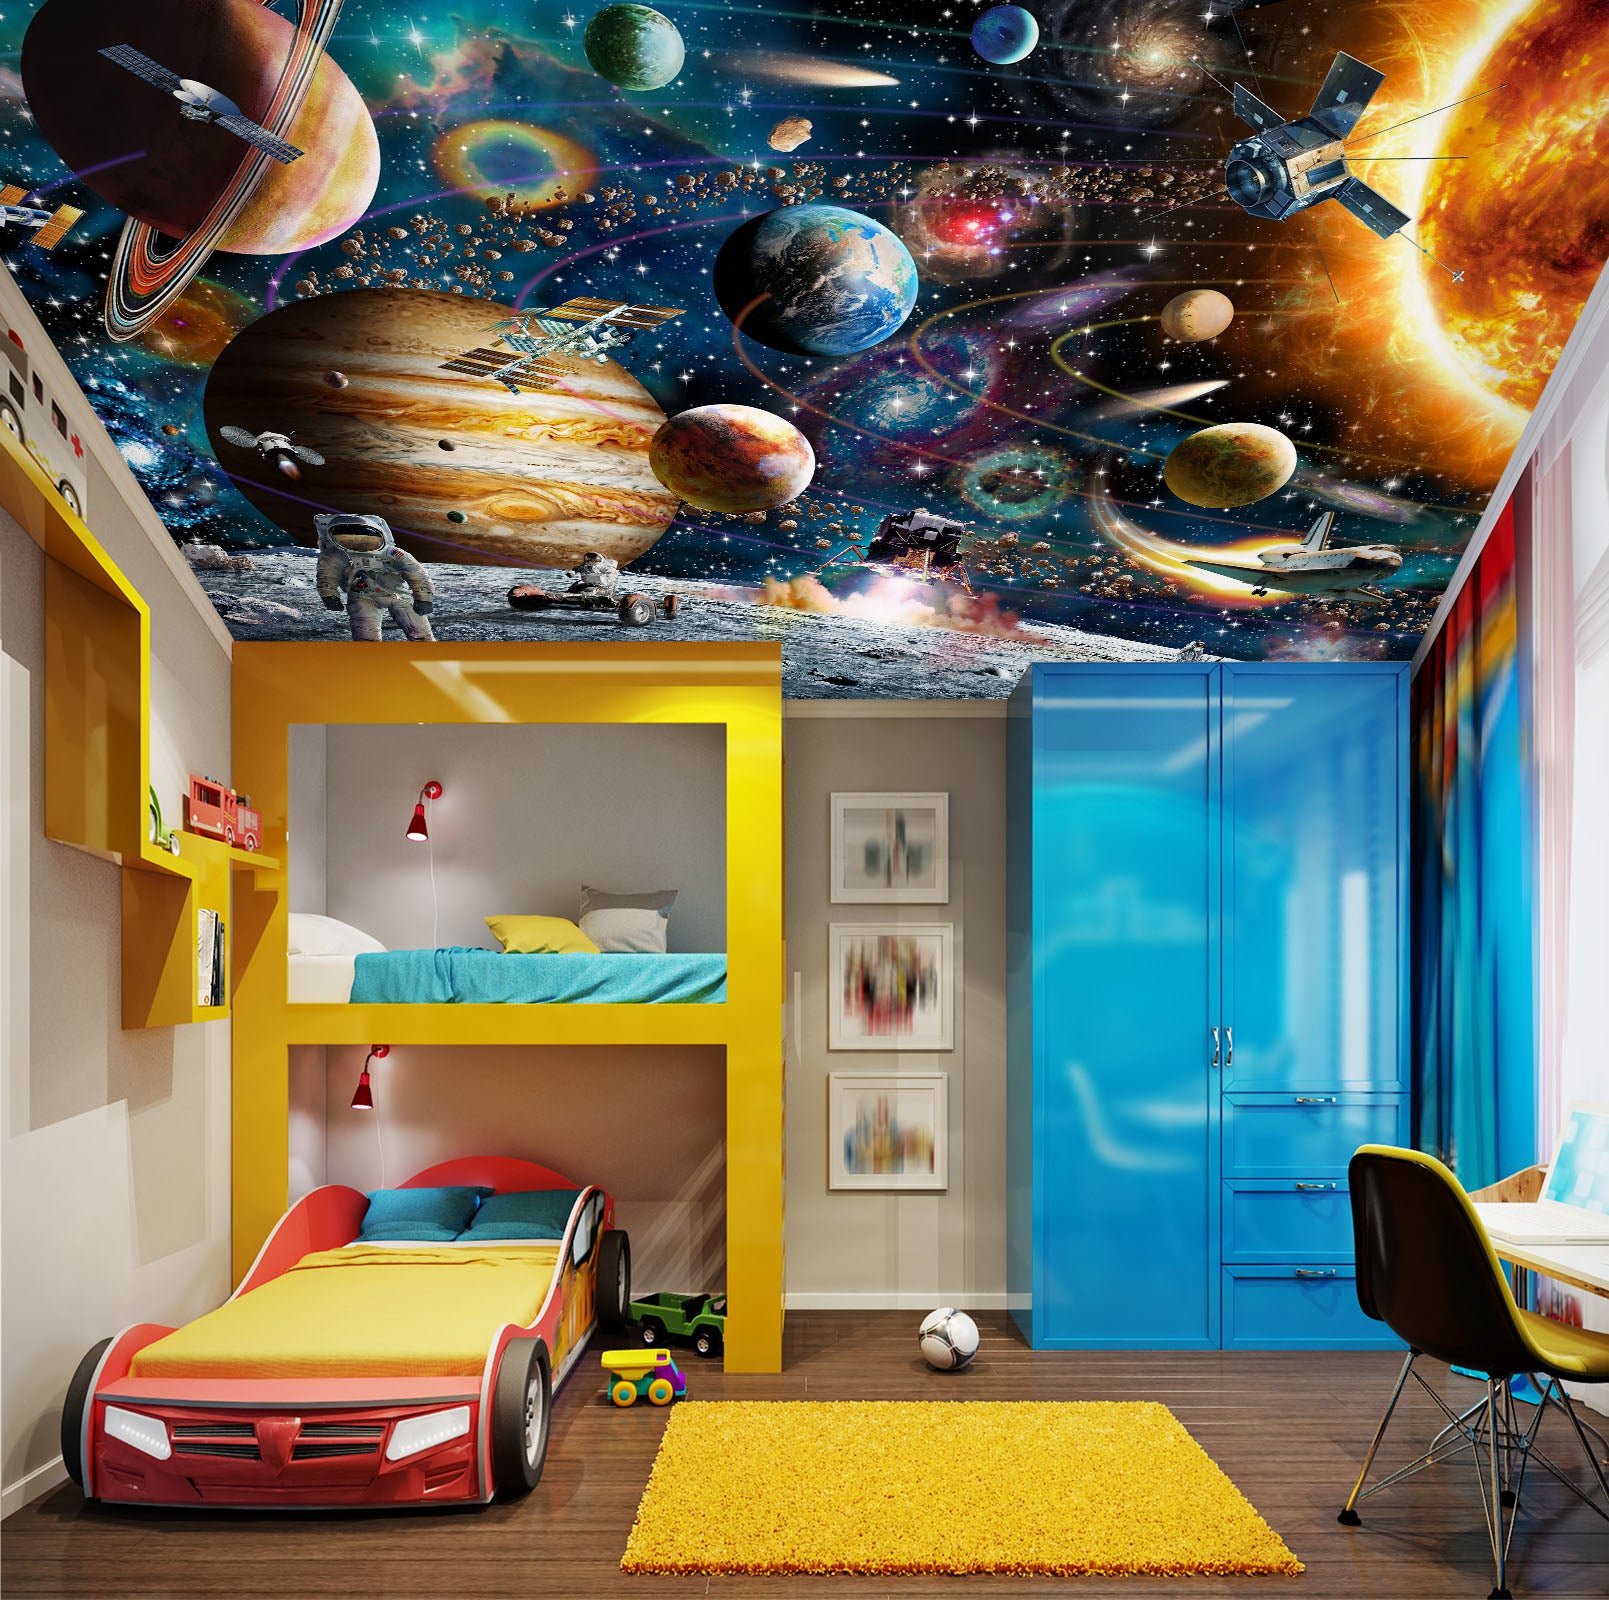 3D Planet Astronaut 1001 Adrian Chesterman Ceiling Wallpaper Murals